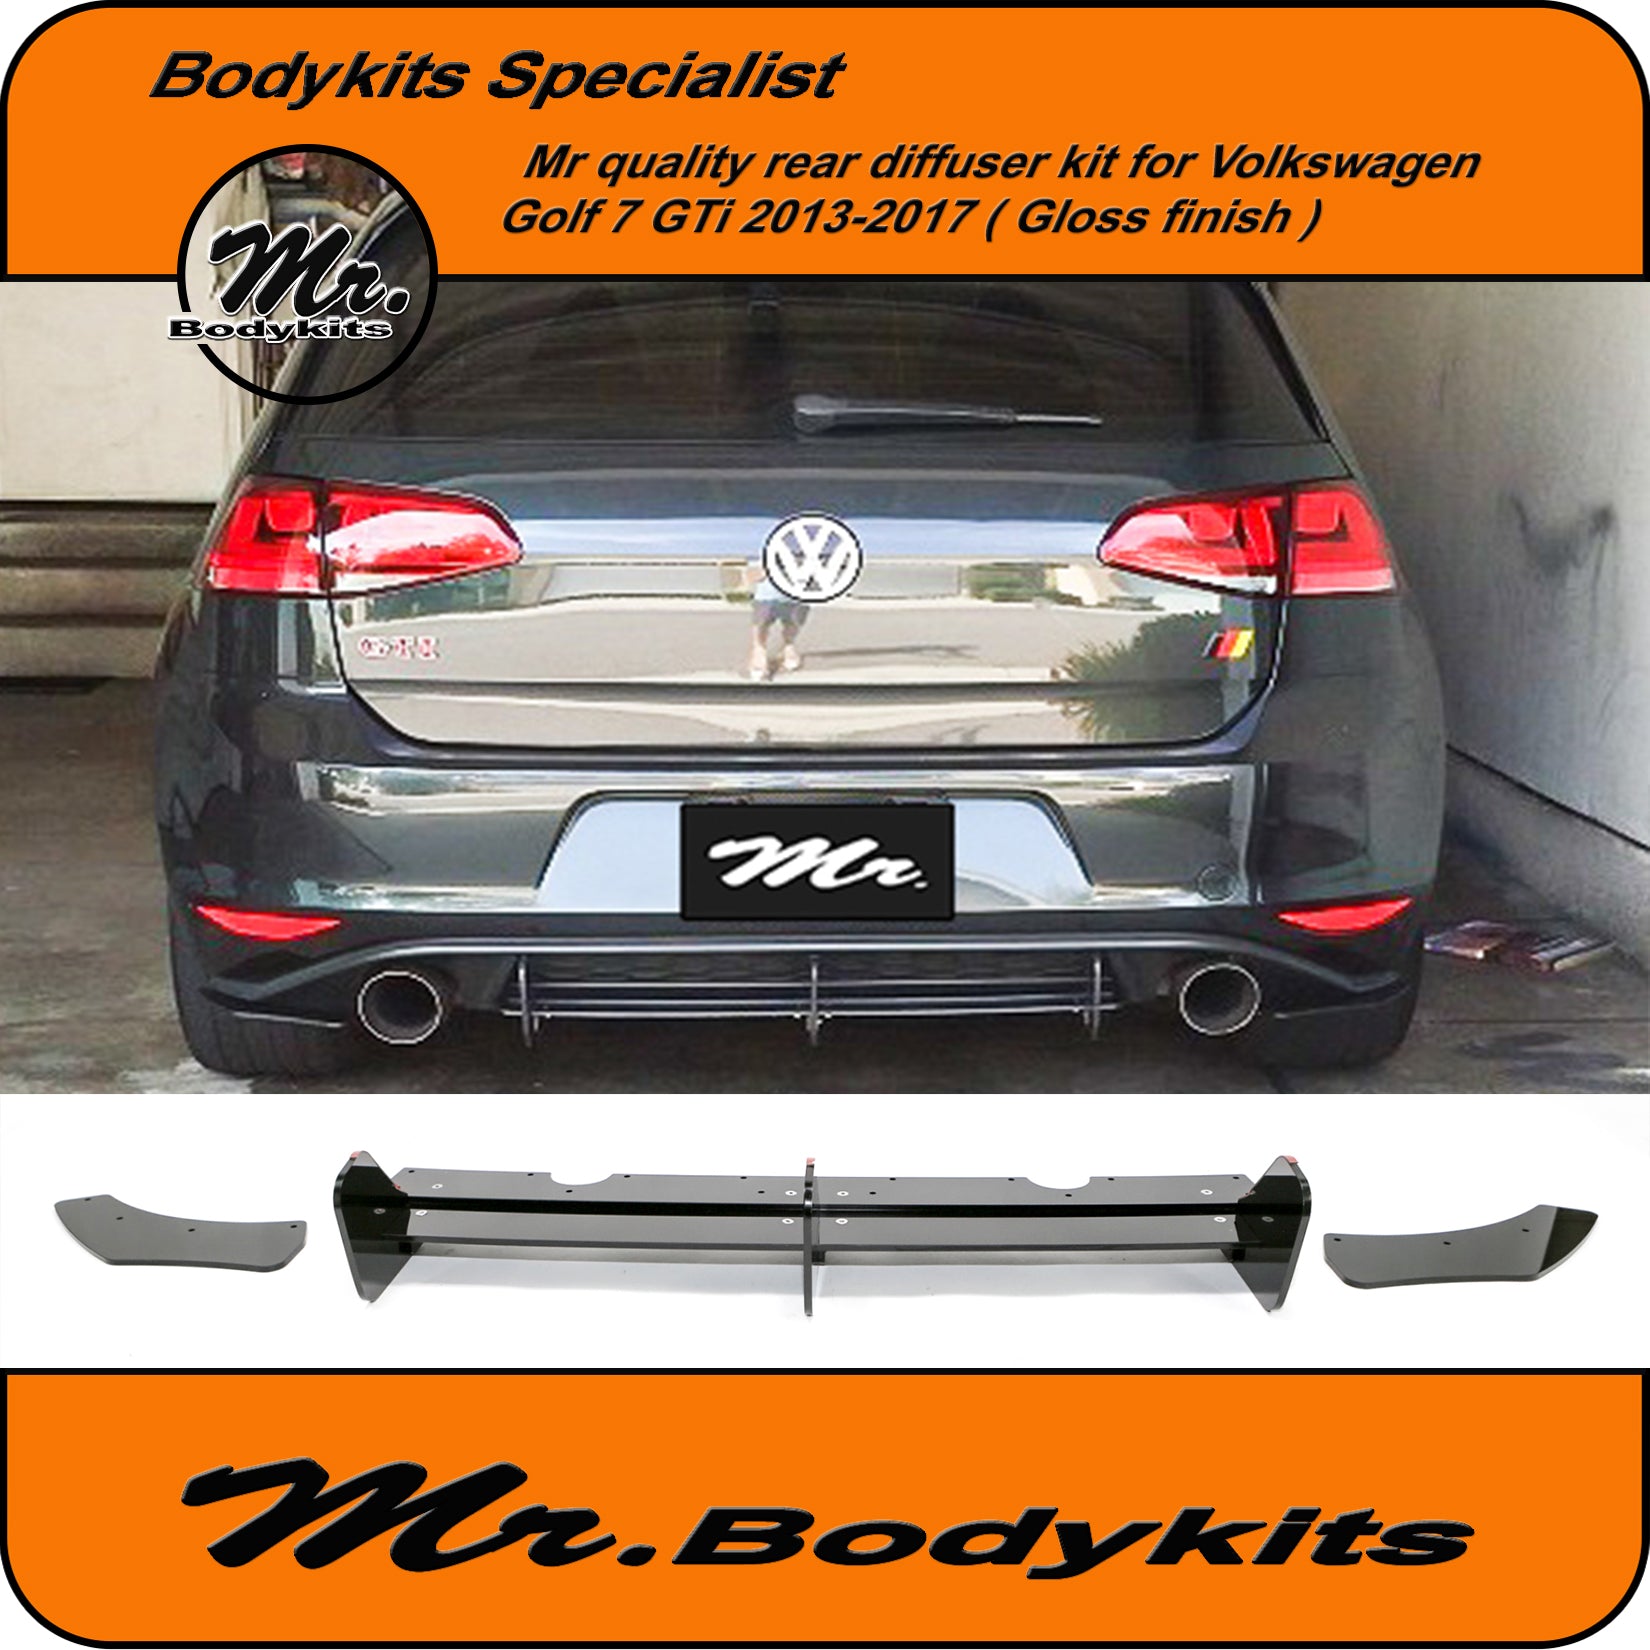 Rear Diffuser For Volkswagen VW Golf 7 / MK VII GTI Factory Bumper 201 - Mr  Bodykits